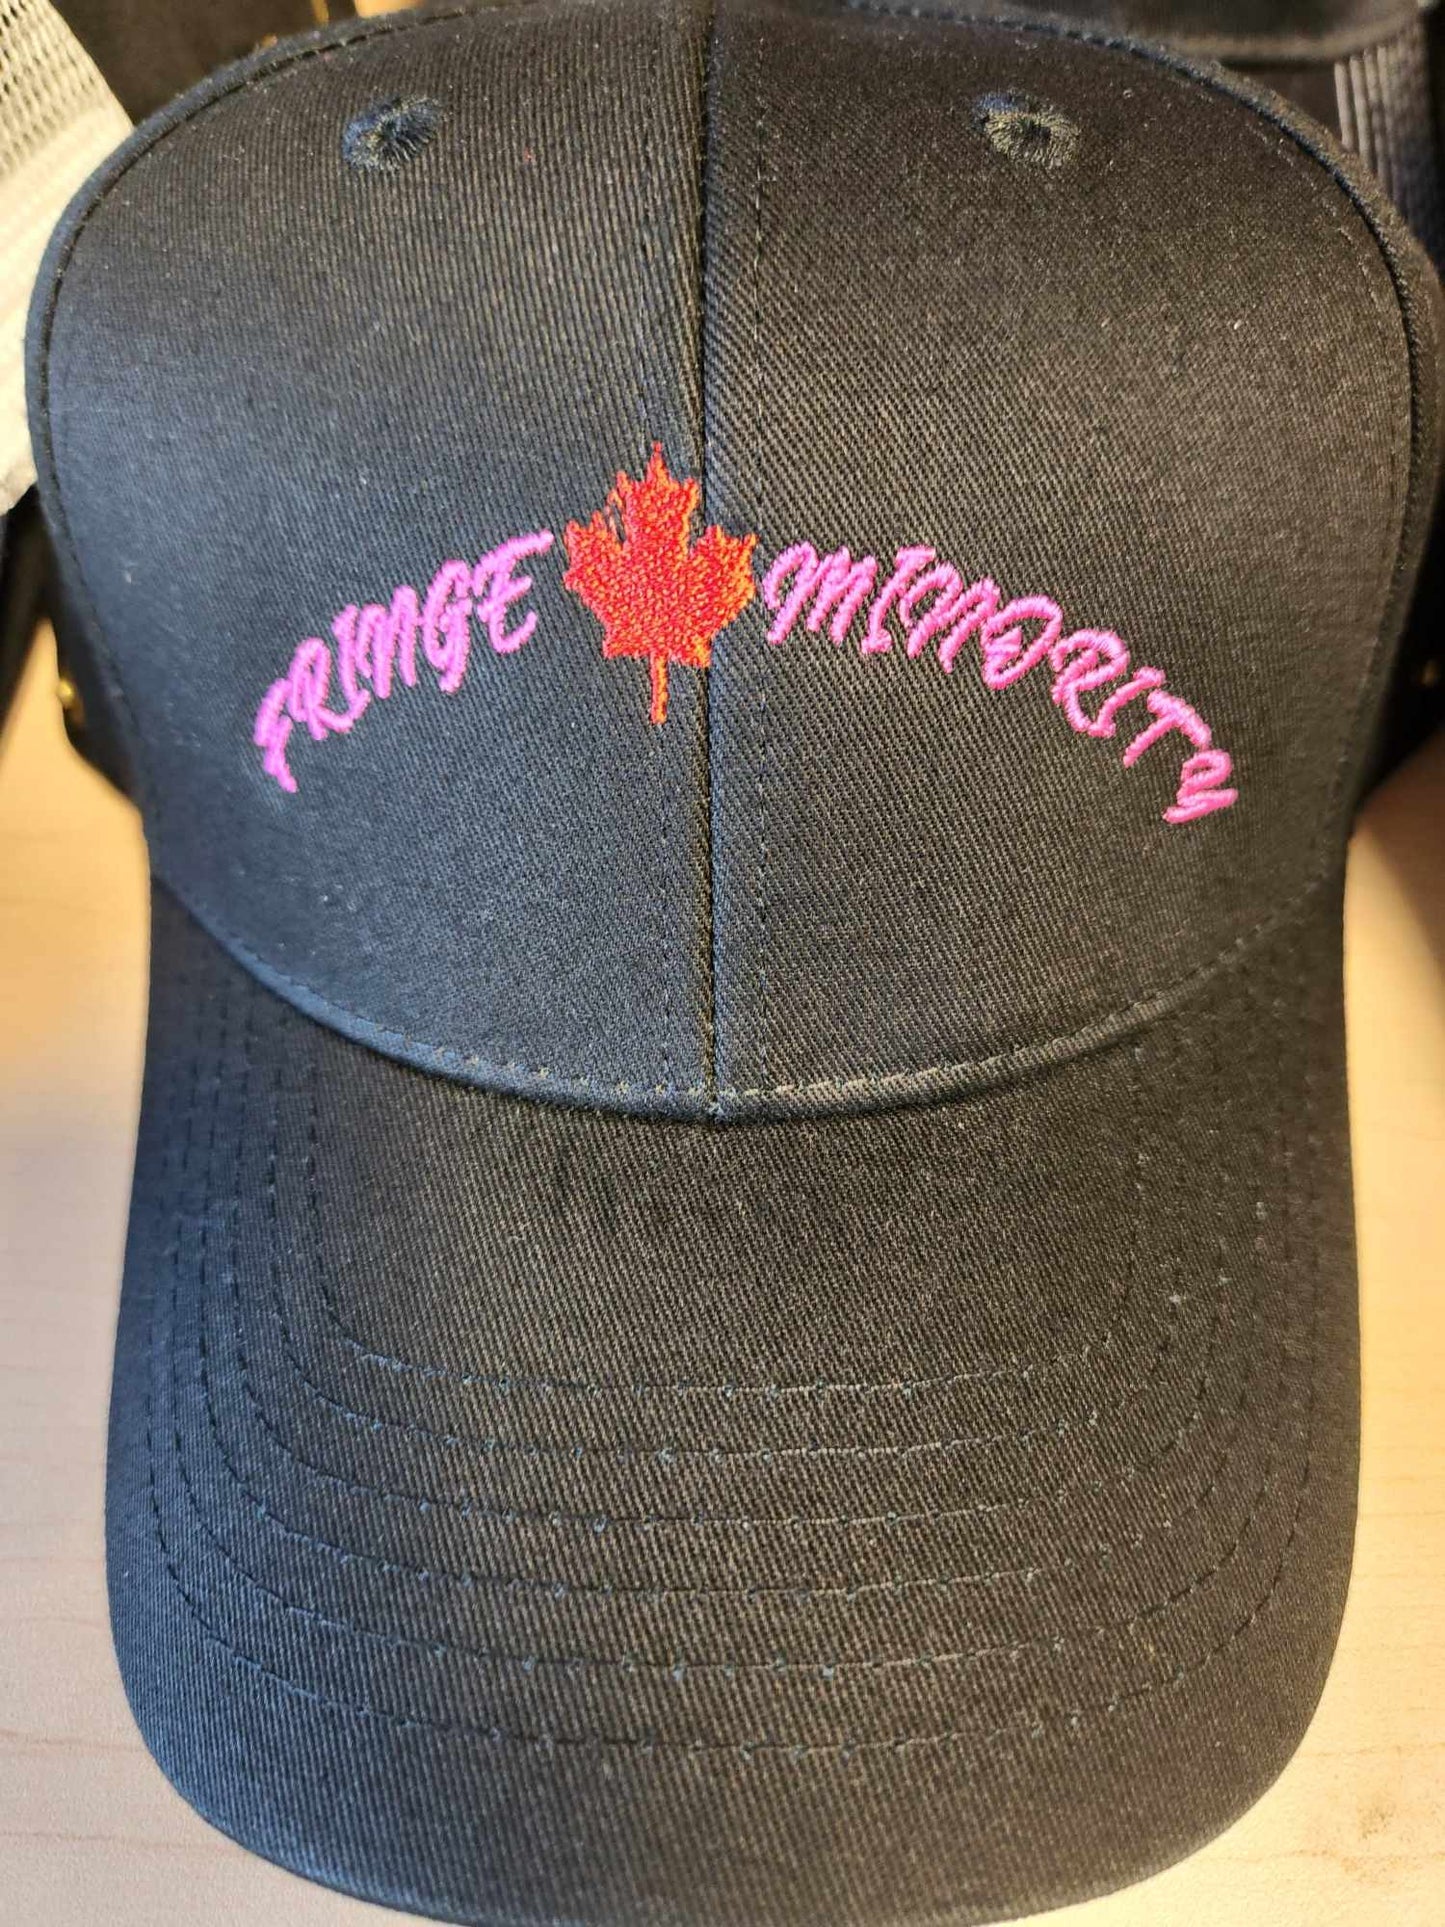 Fringe Minority Hats (Custom Order)